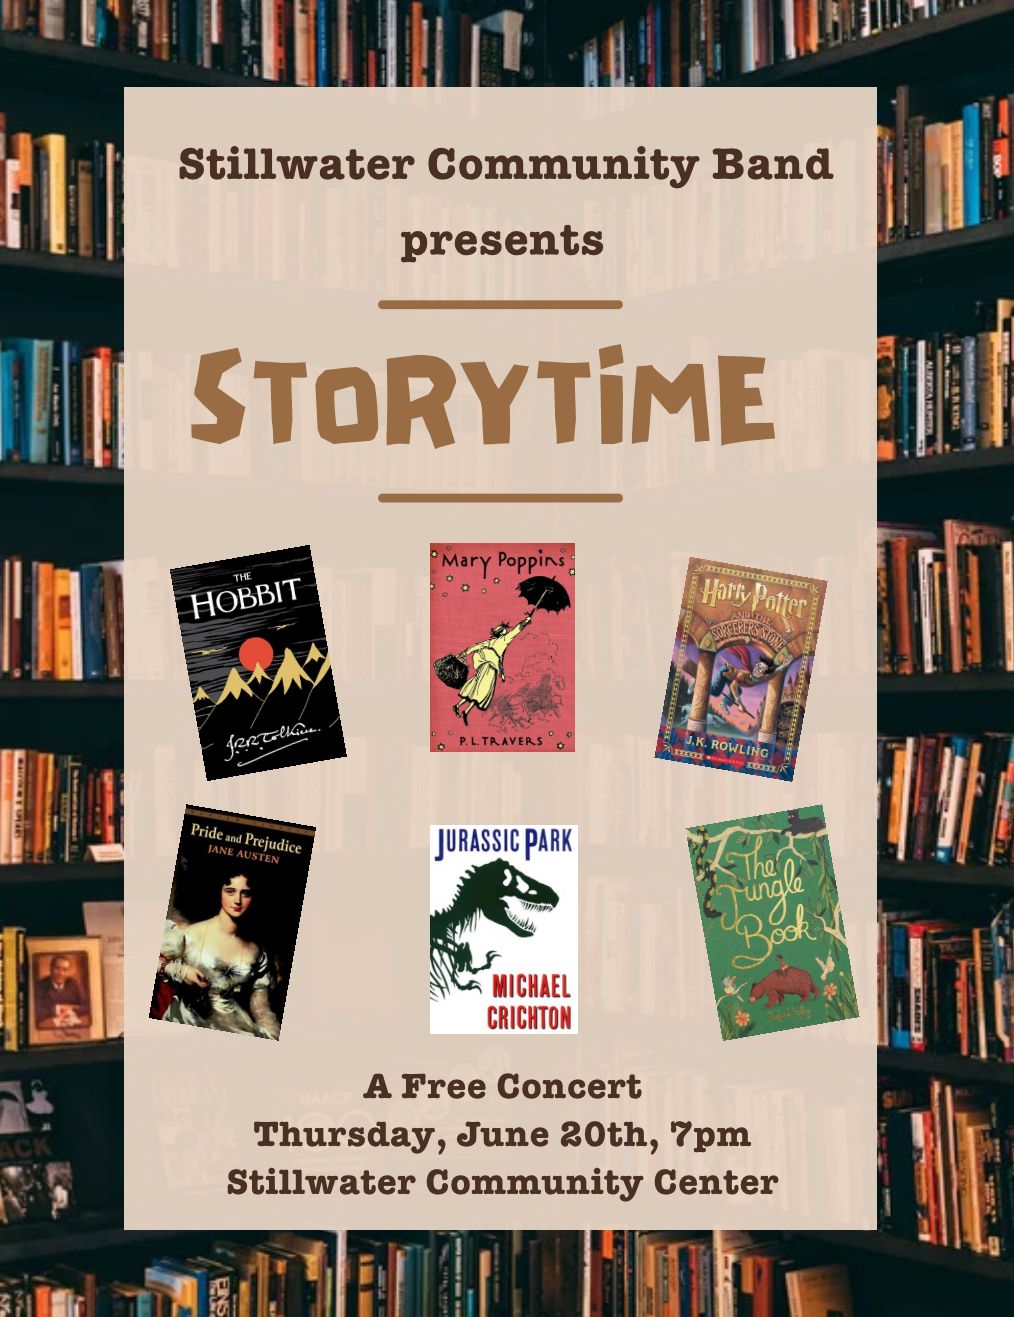 Stillwater Community Band Concert: "Storytime"